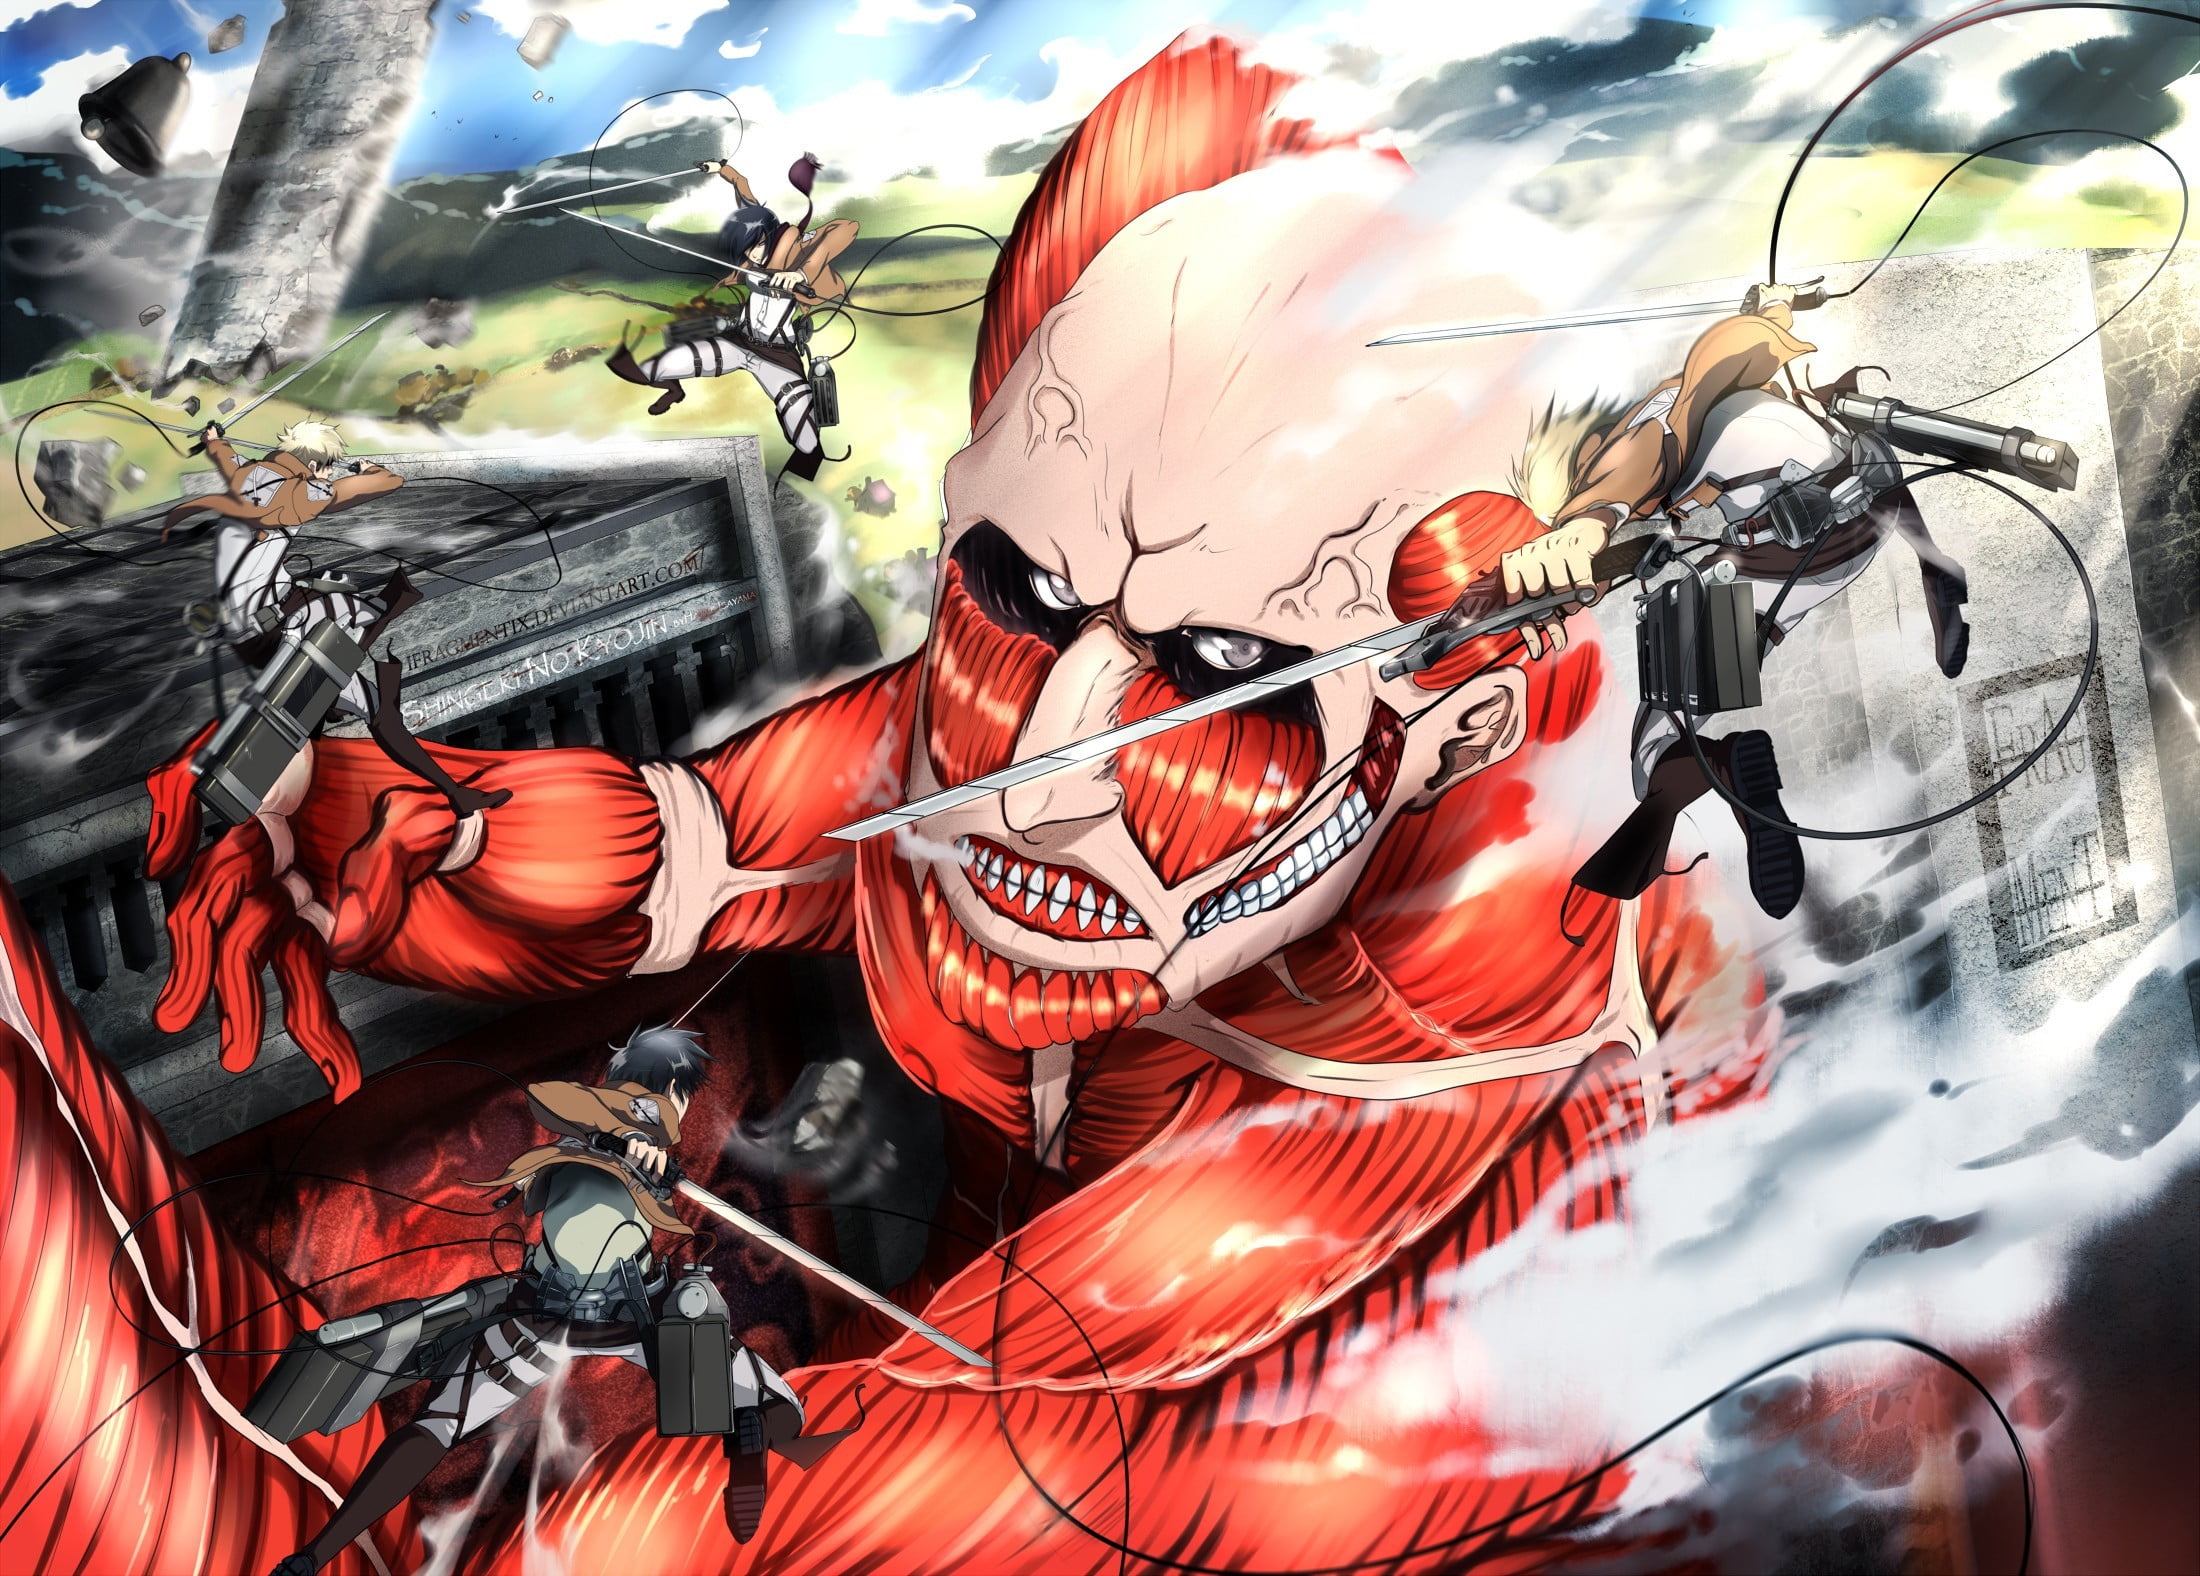 Attack on Titans poster, Shingeki no Kyojin, Colossal Titan, anime